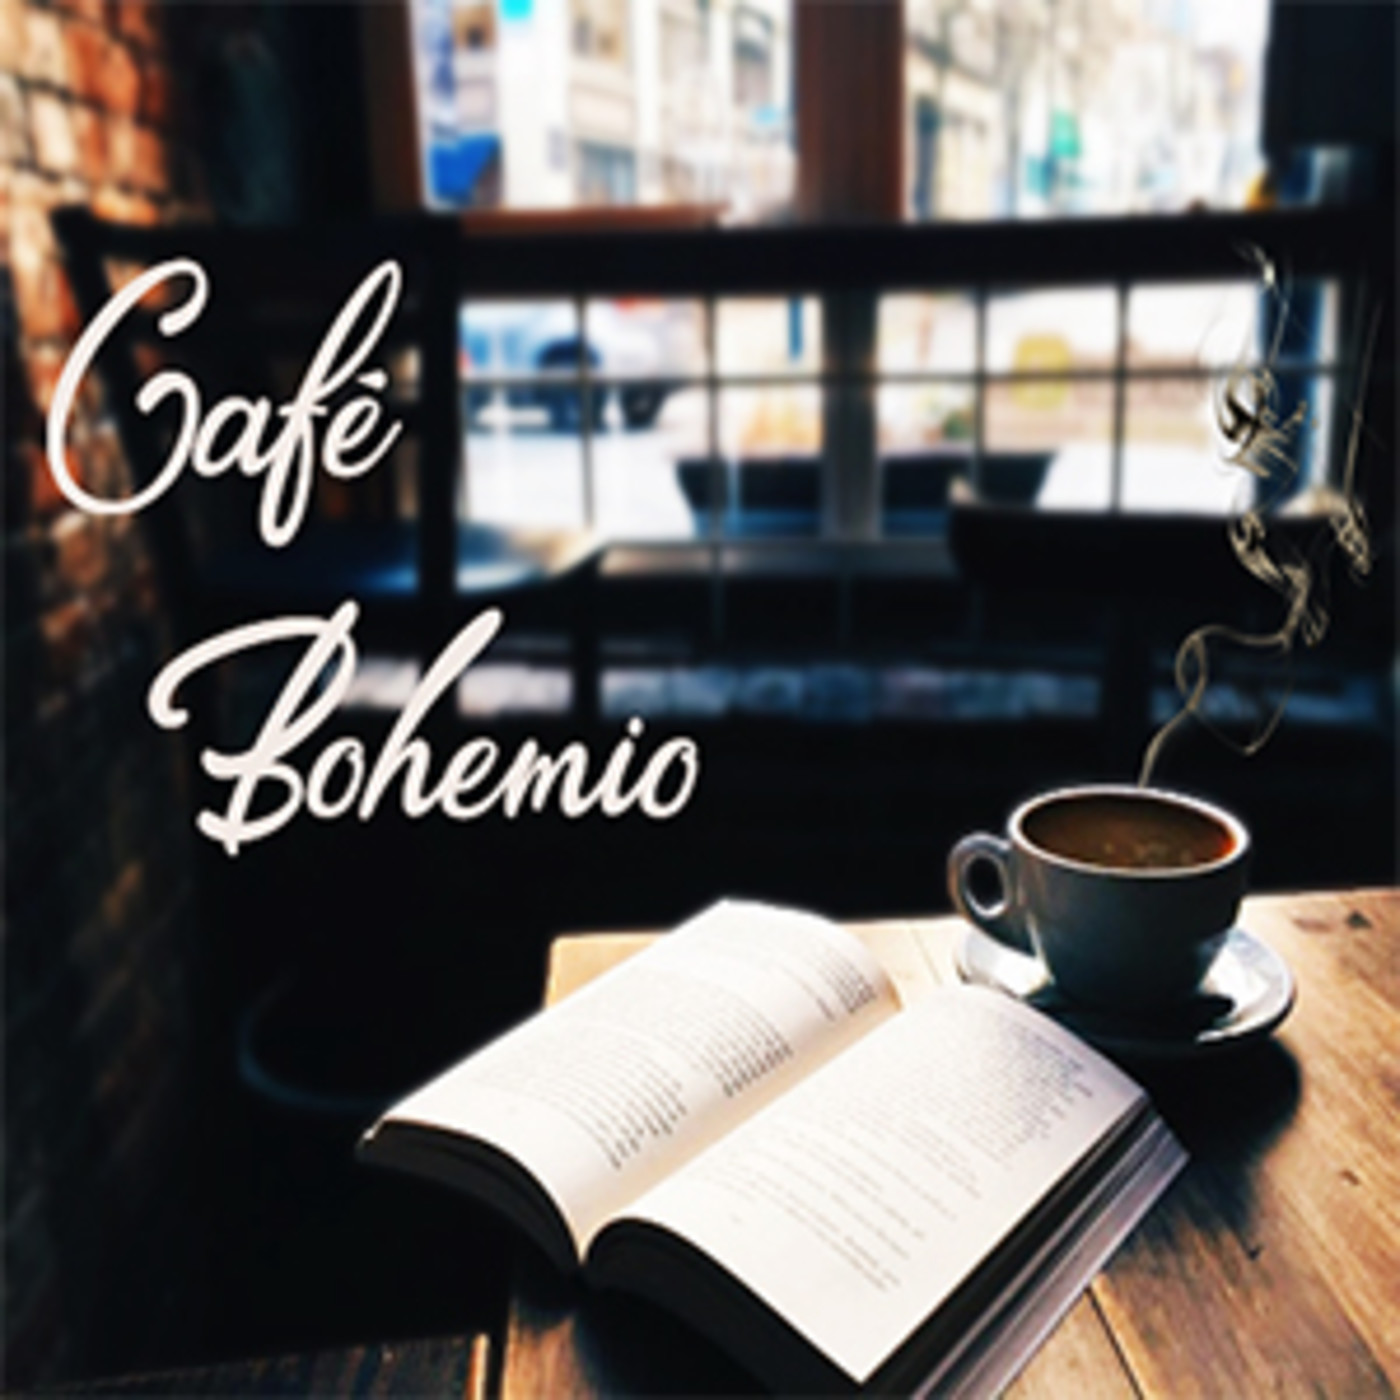 Café Bohemio